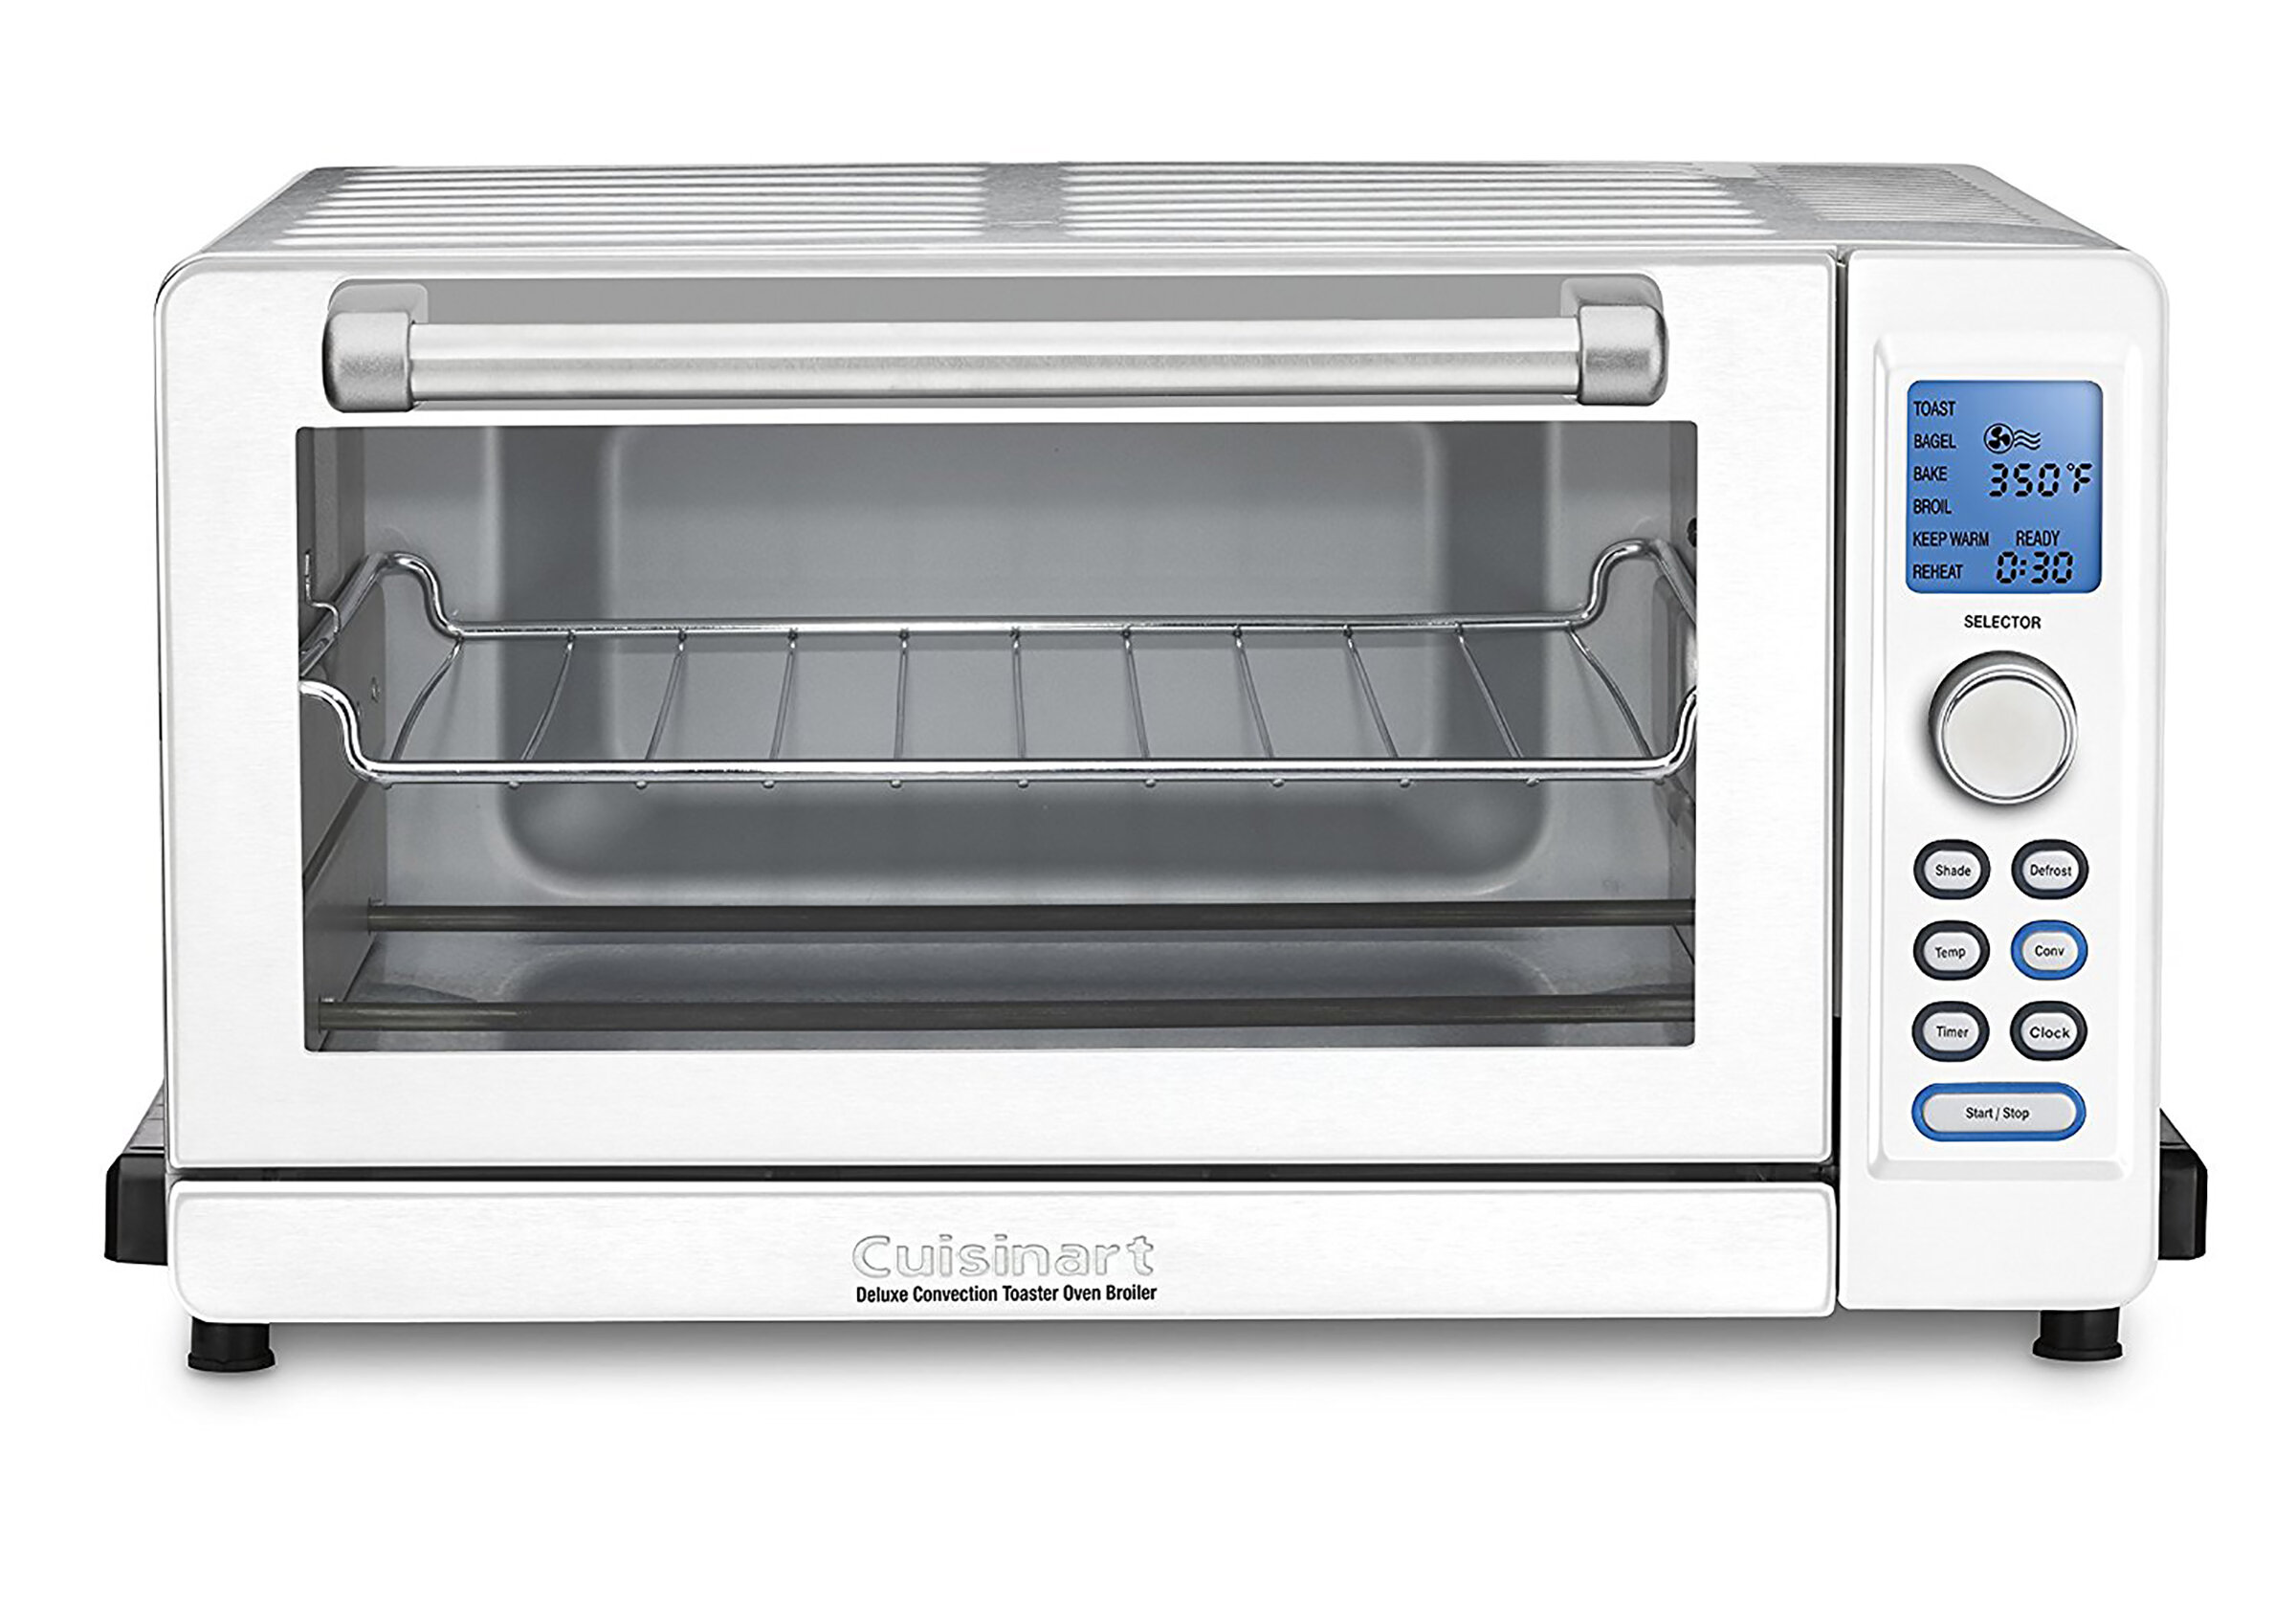 Cuisinart Deluxe Convection Toaster Oven Broiler Reviews Wayfair